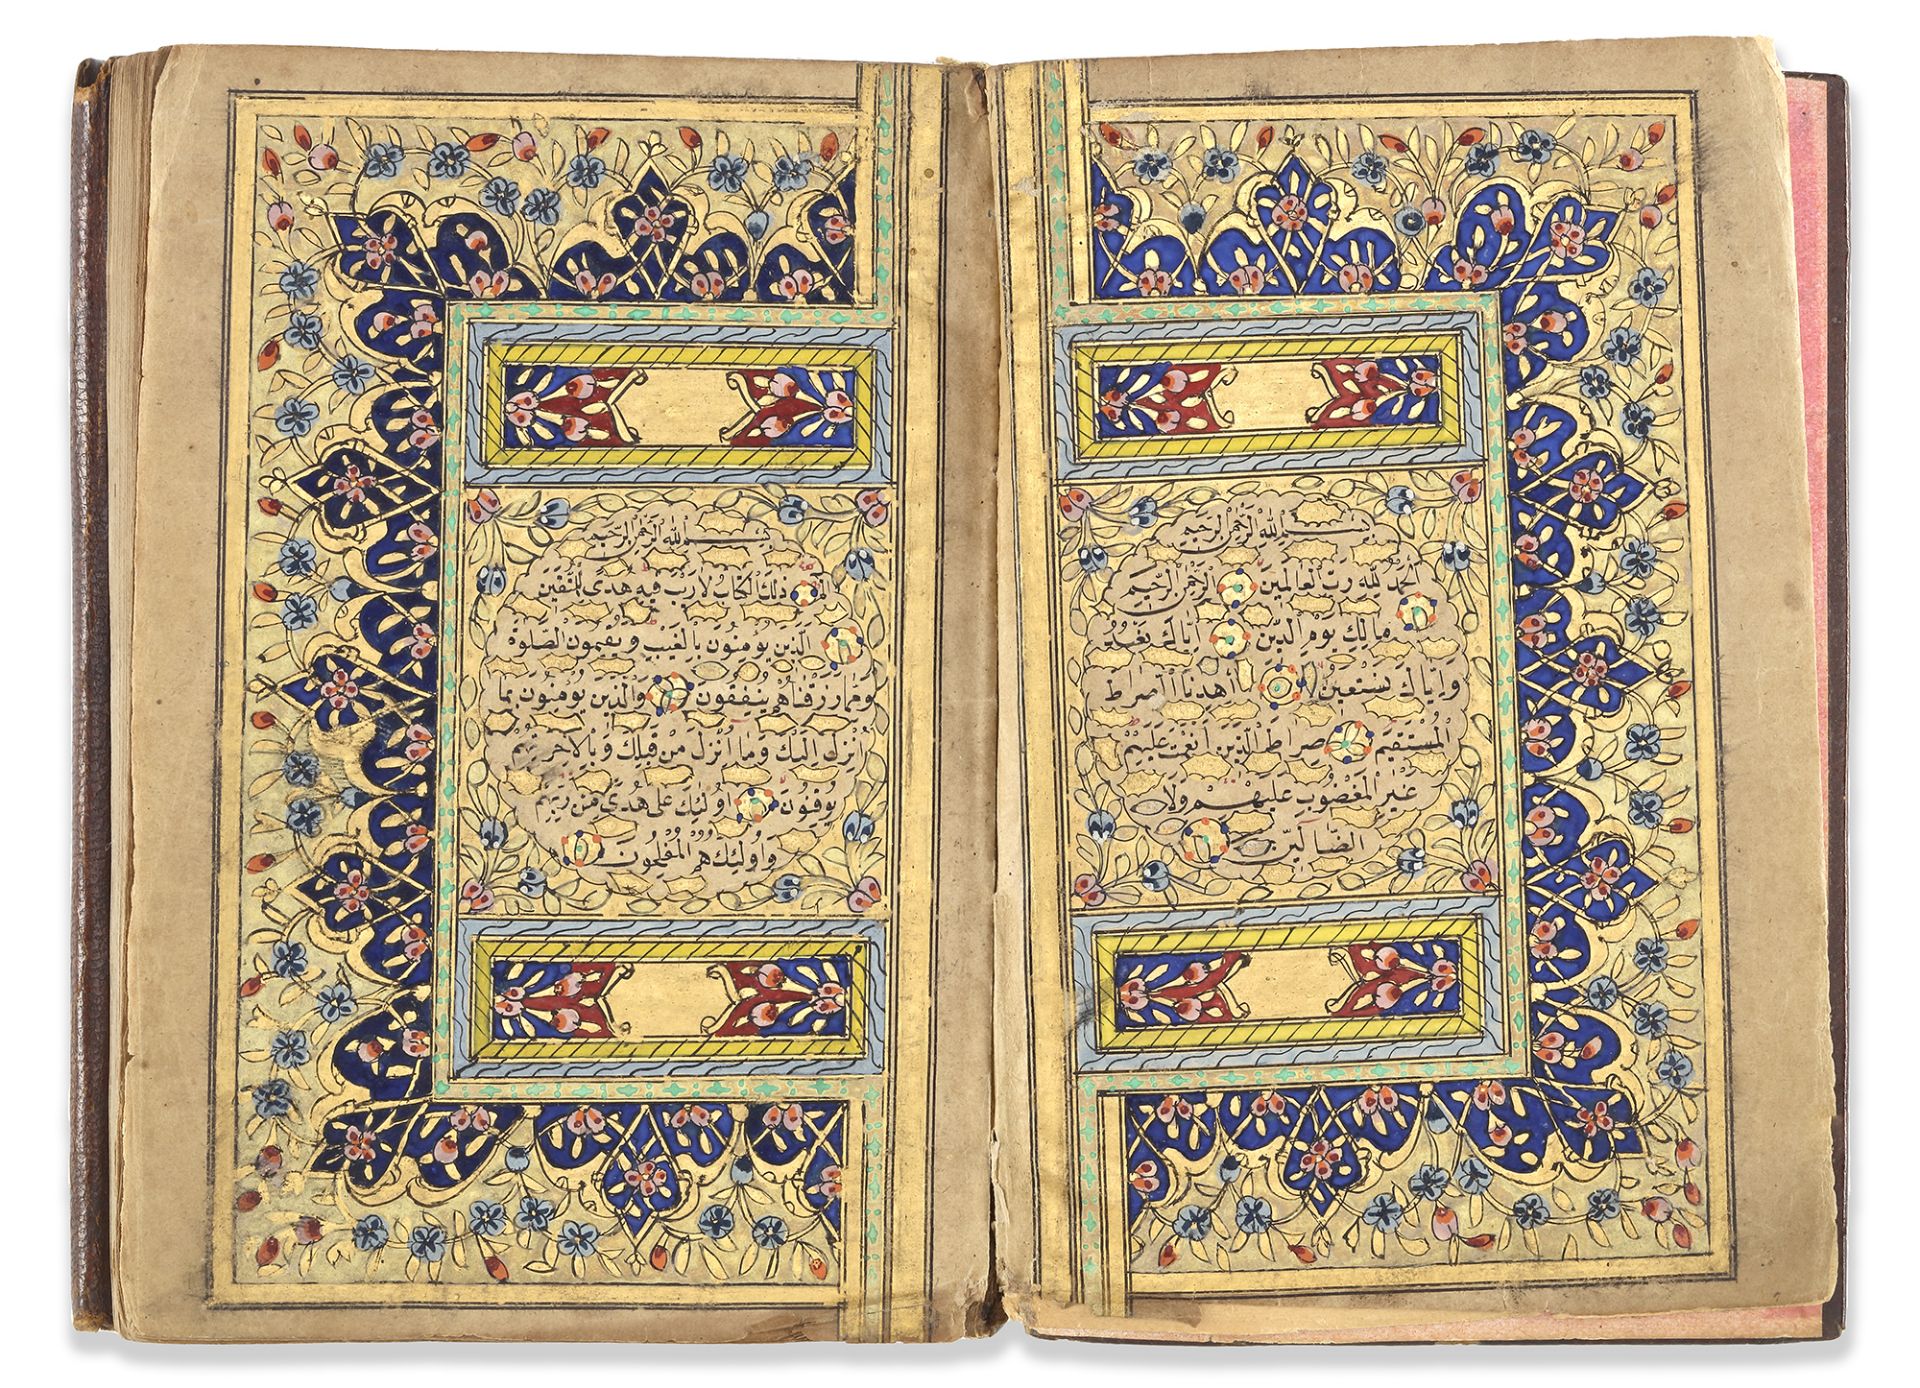 AN OTTOMAN QURAN SIGNED IBRAHIM TATEFI, OTTOMAN TURKEY, DATED 1277 AH/1860 AD